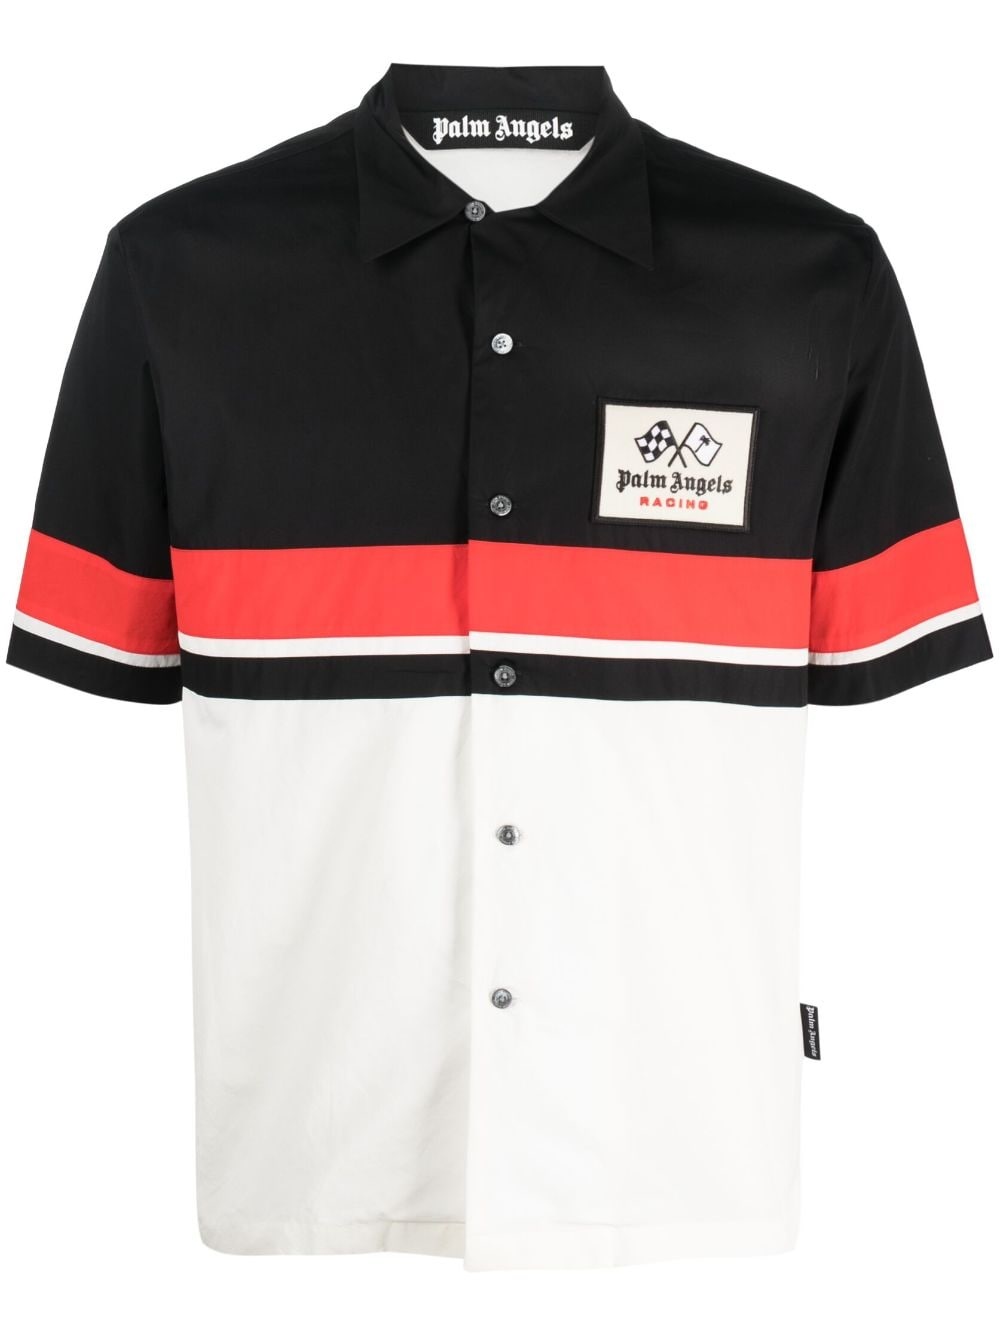 x Haas MoneyGram Racing Bowling shirt - 1